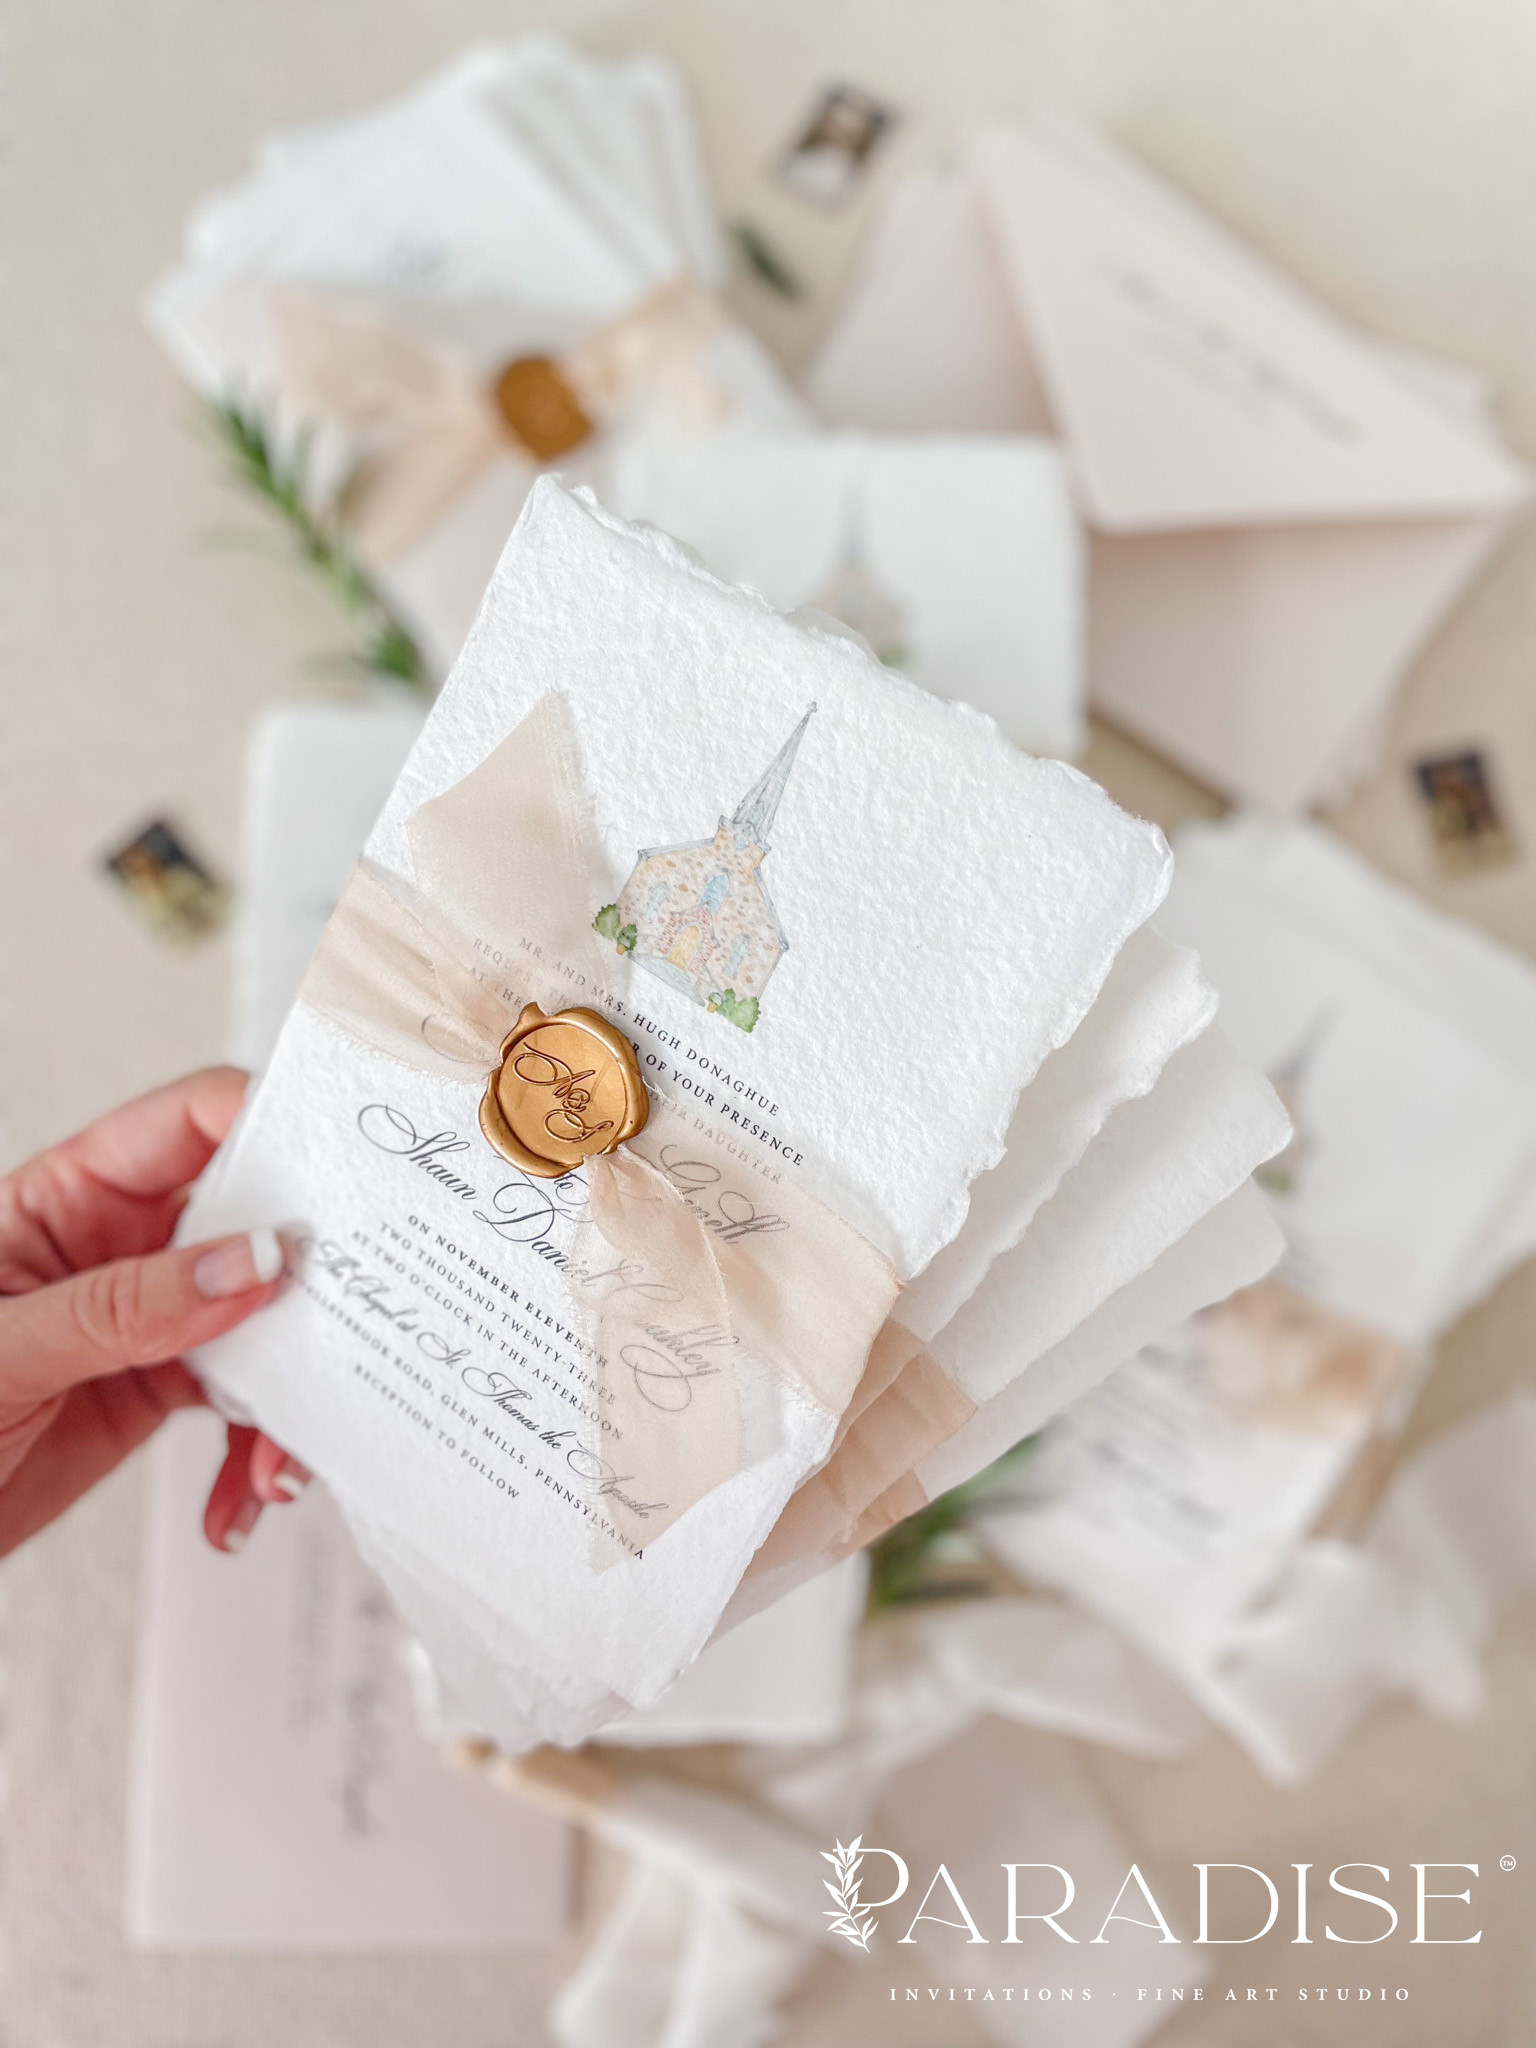 handmade paper, deckled edges paper, wedding invitations, wedding invitation suite, wedding stationery, invitations, silk ribbons, wax seals